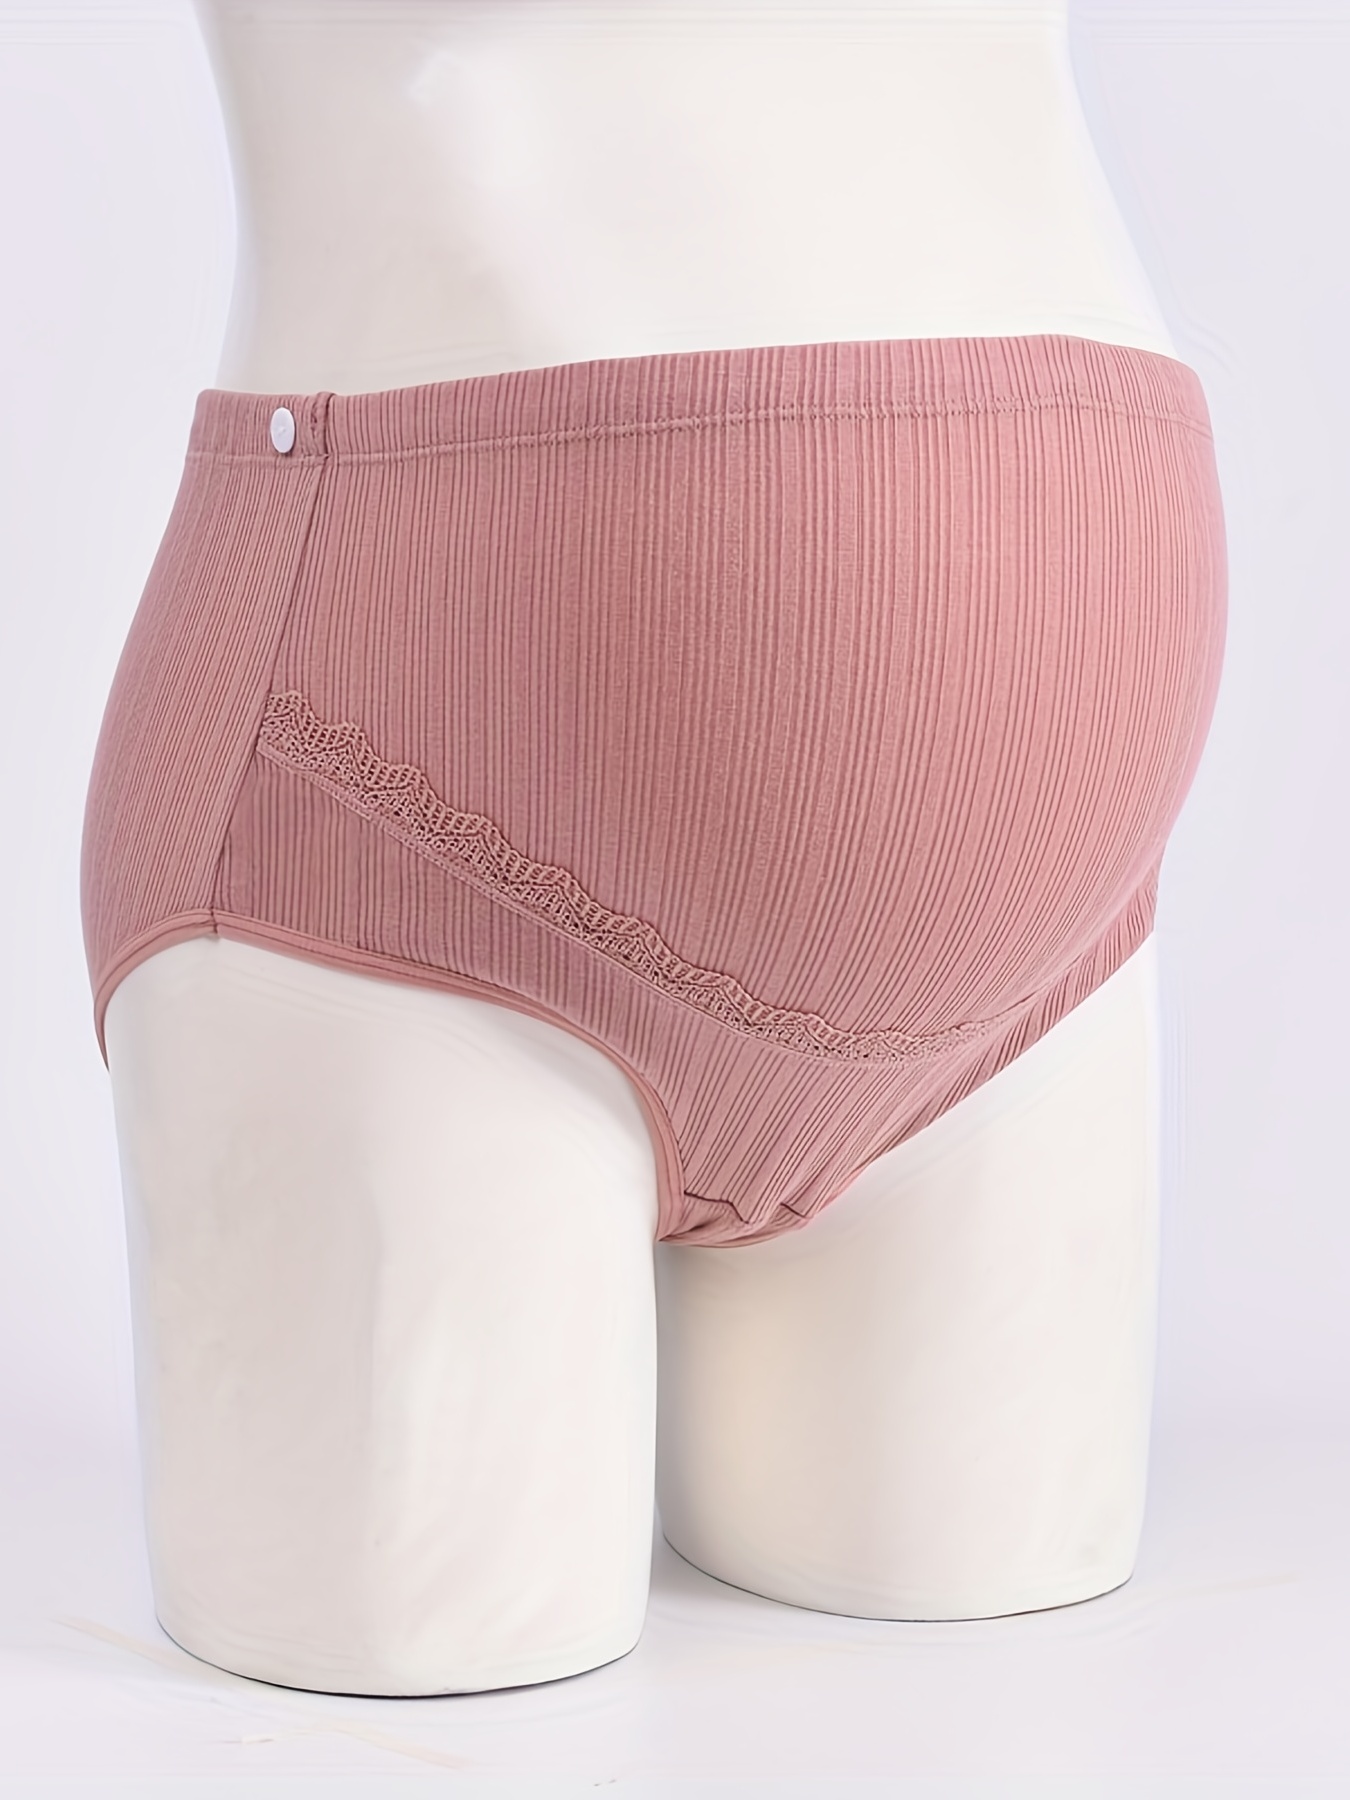 Women 's Maternity Underwear Cotton High Waist Belly Pregnancy Support  Panties Briefs